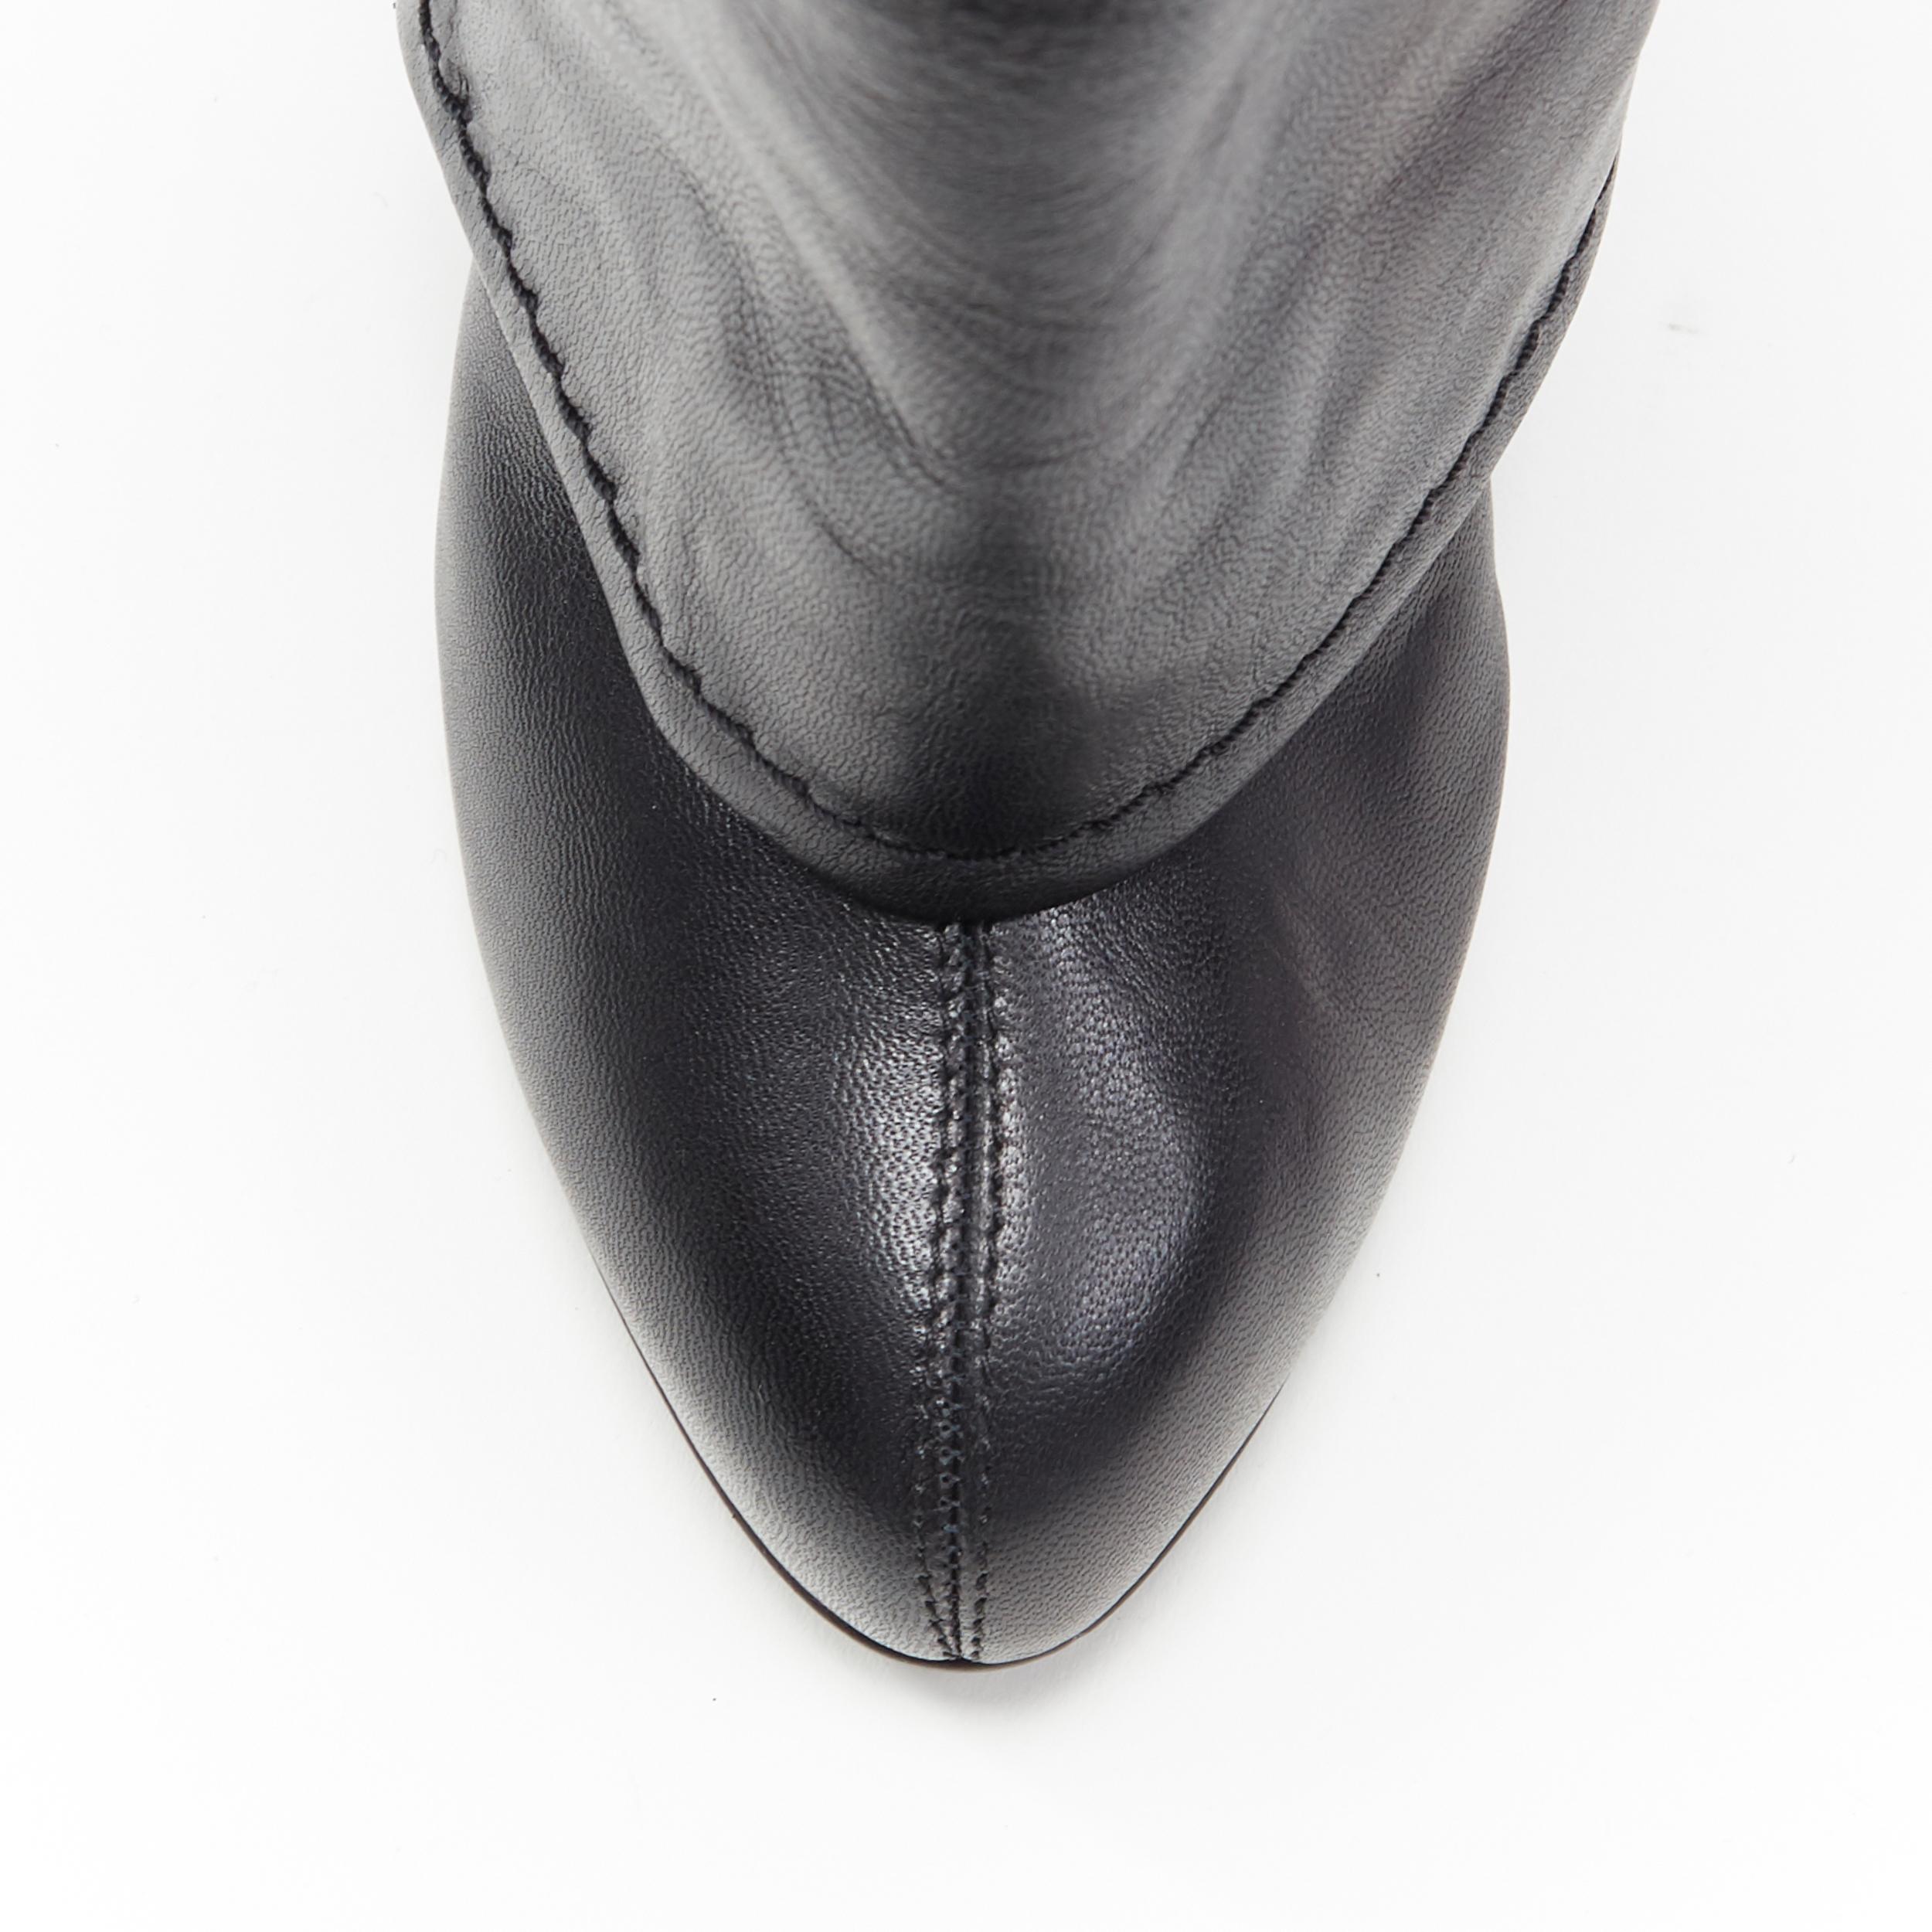 new GIUSEPPE ZANOTTI black leather zipper foldover pant high heel boot EU36 2